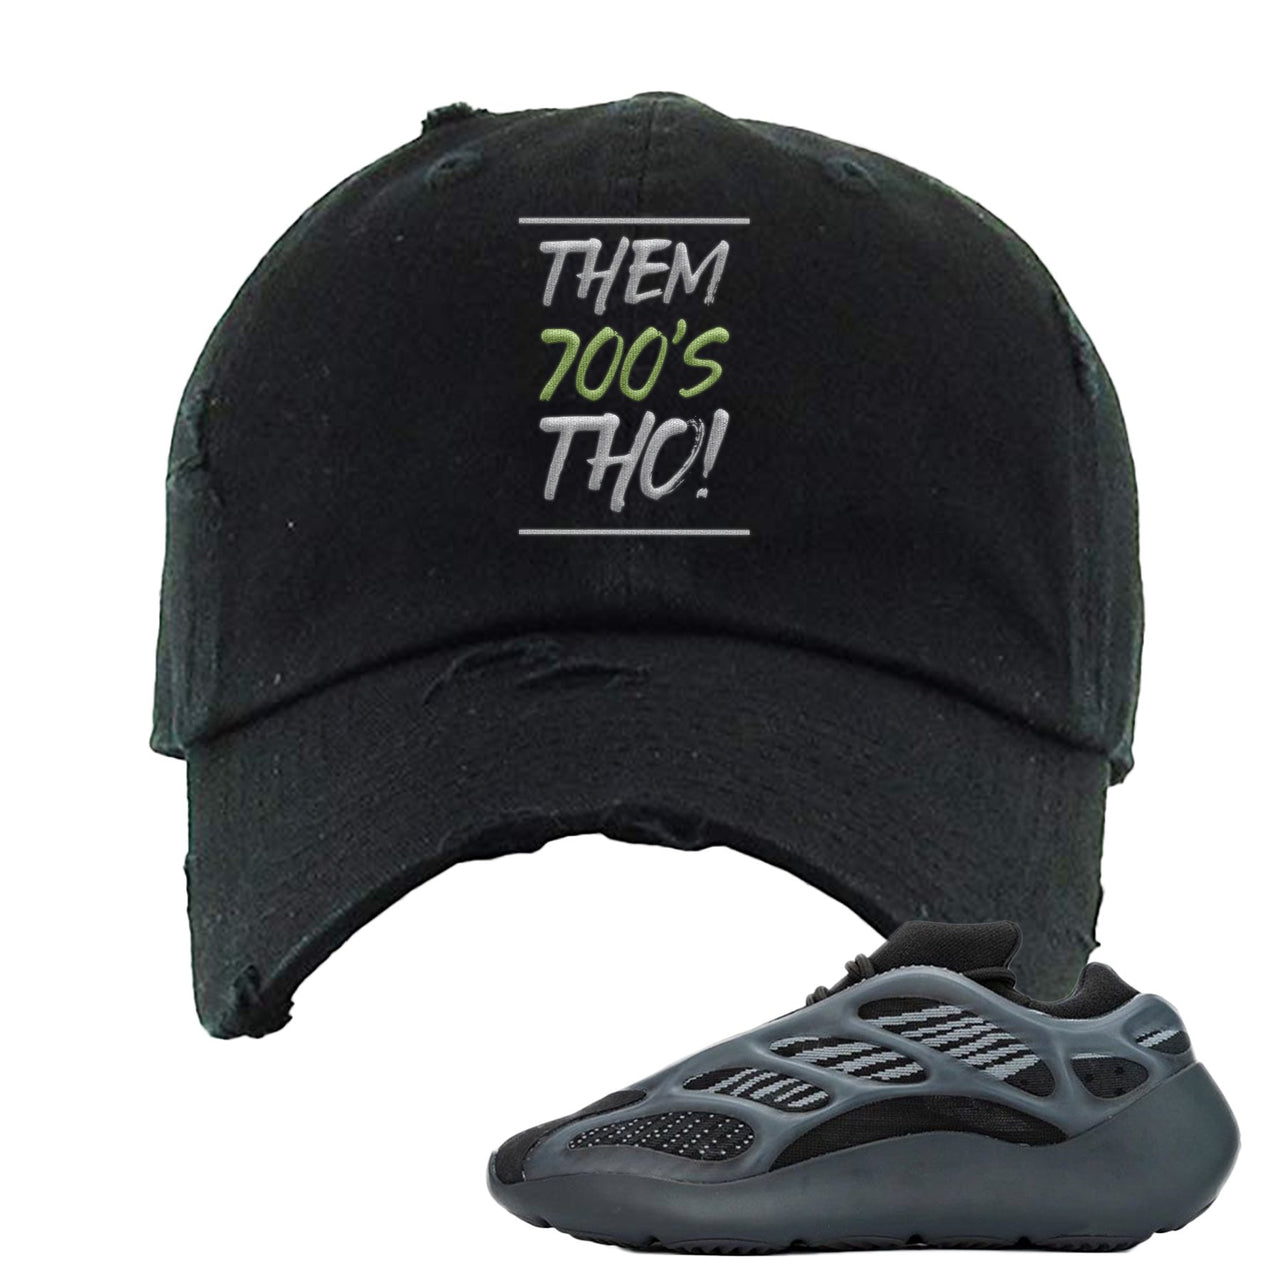 Alvah v3 700s Distressed Dad Hat | Them 700's Tho!, Black